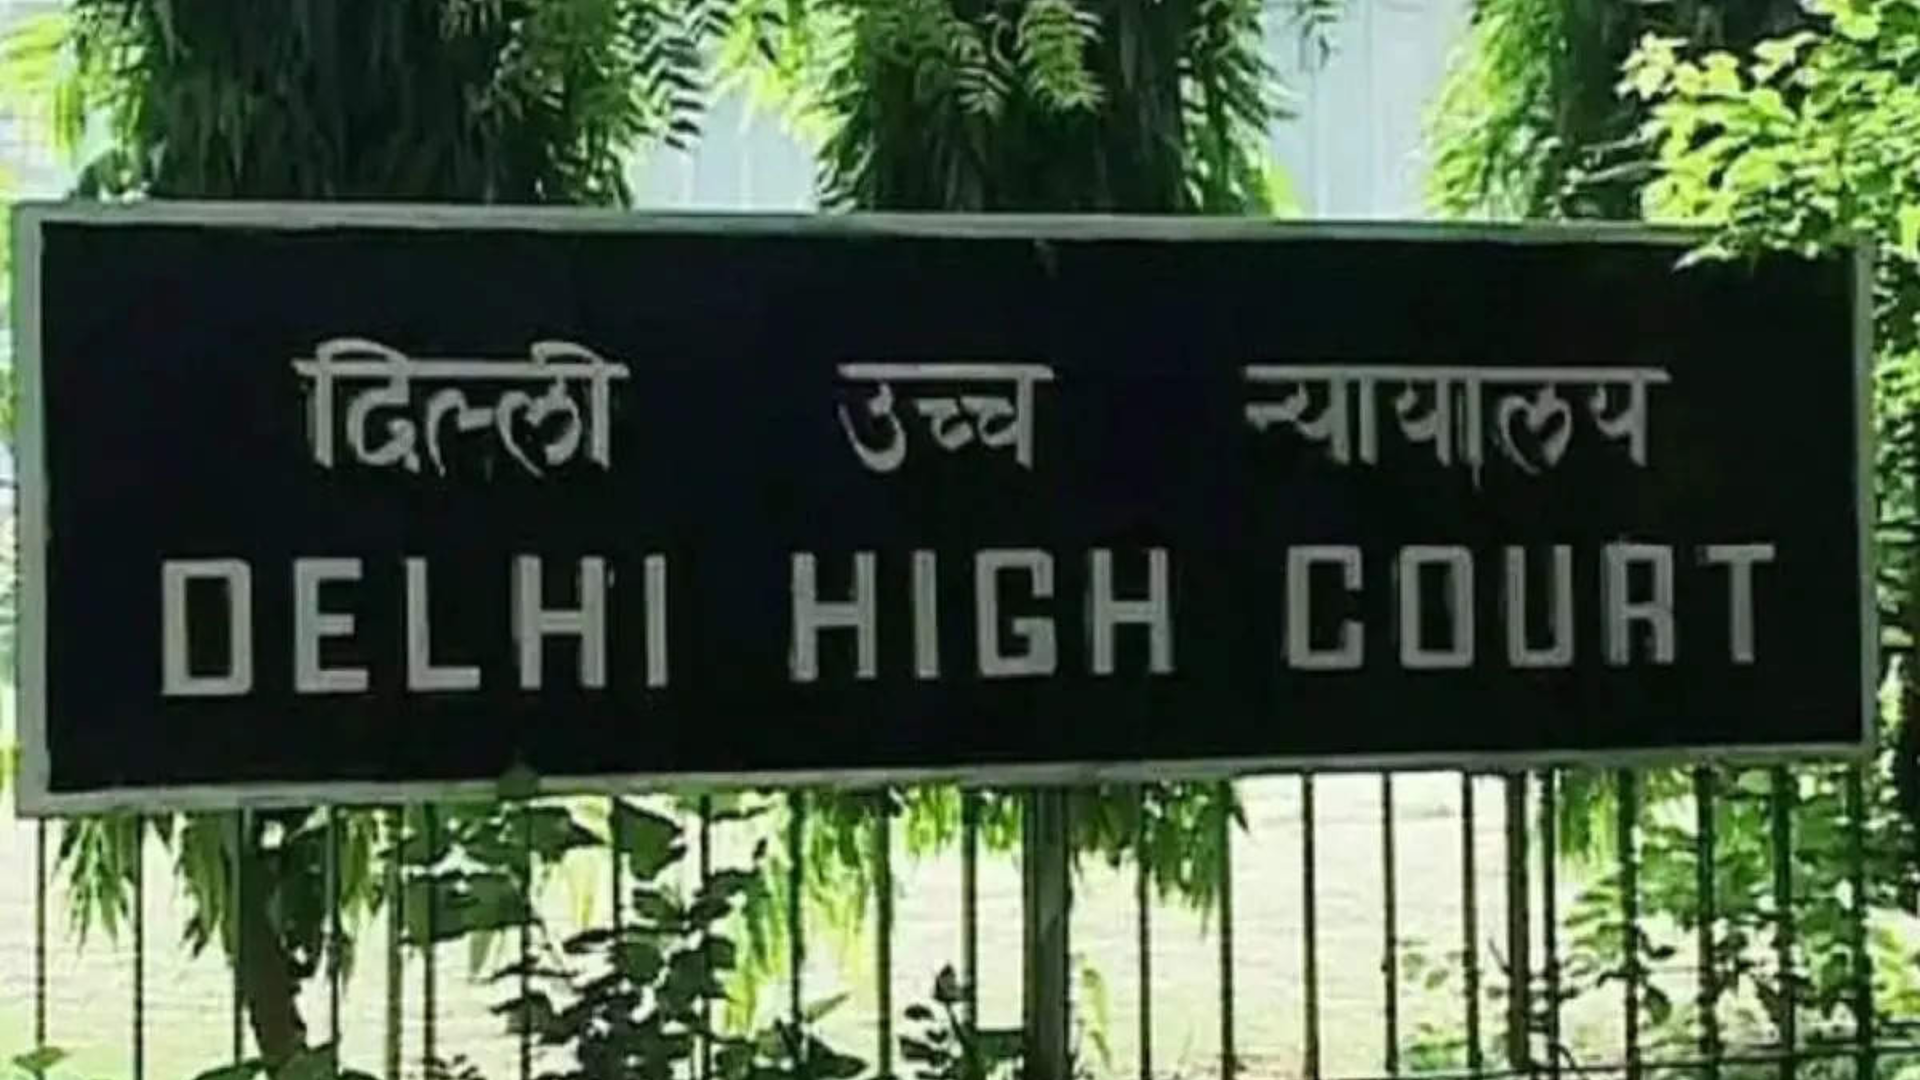 Delhi High Court Judge Recuses from Hearing Plea Alleging Defamation in BBC Documentary on PM Modi